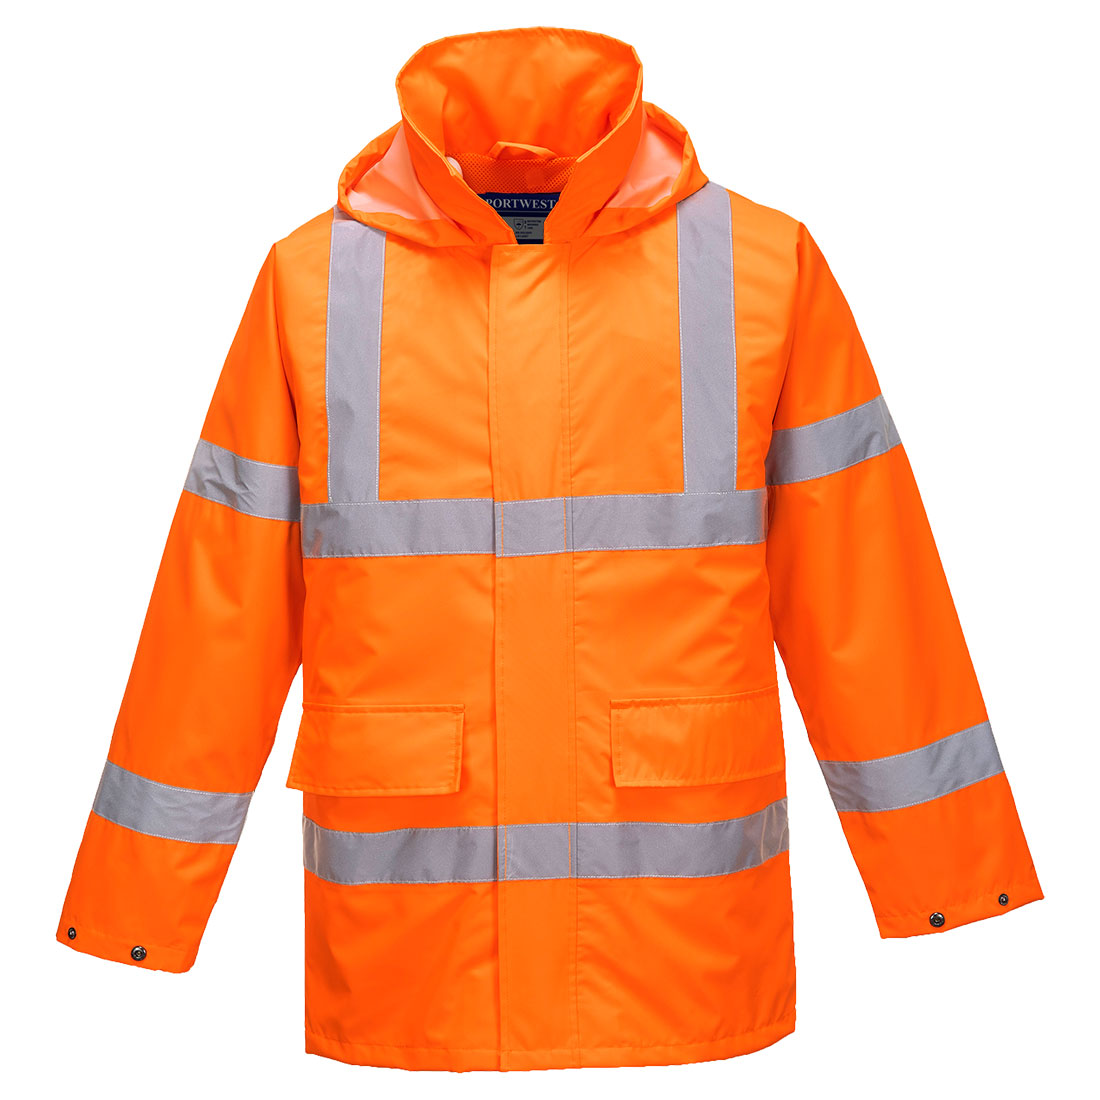 Lite Traffic Jacket, Orange     Size Medium R/Fit